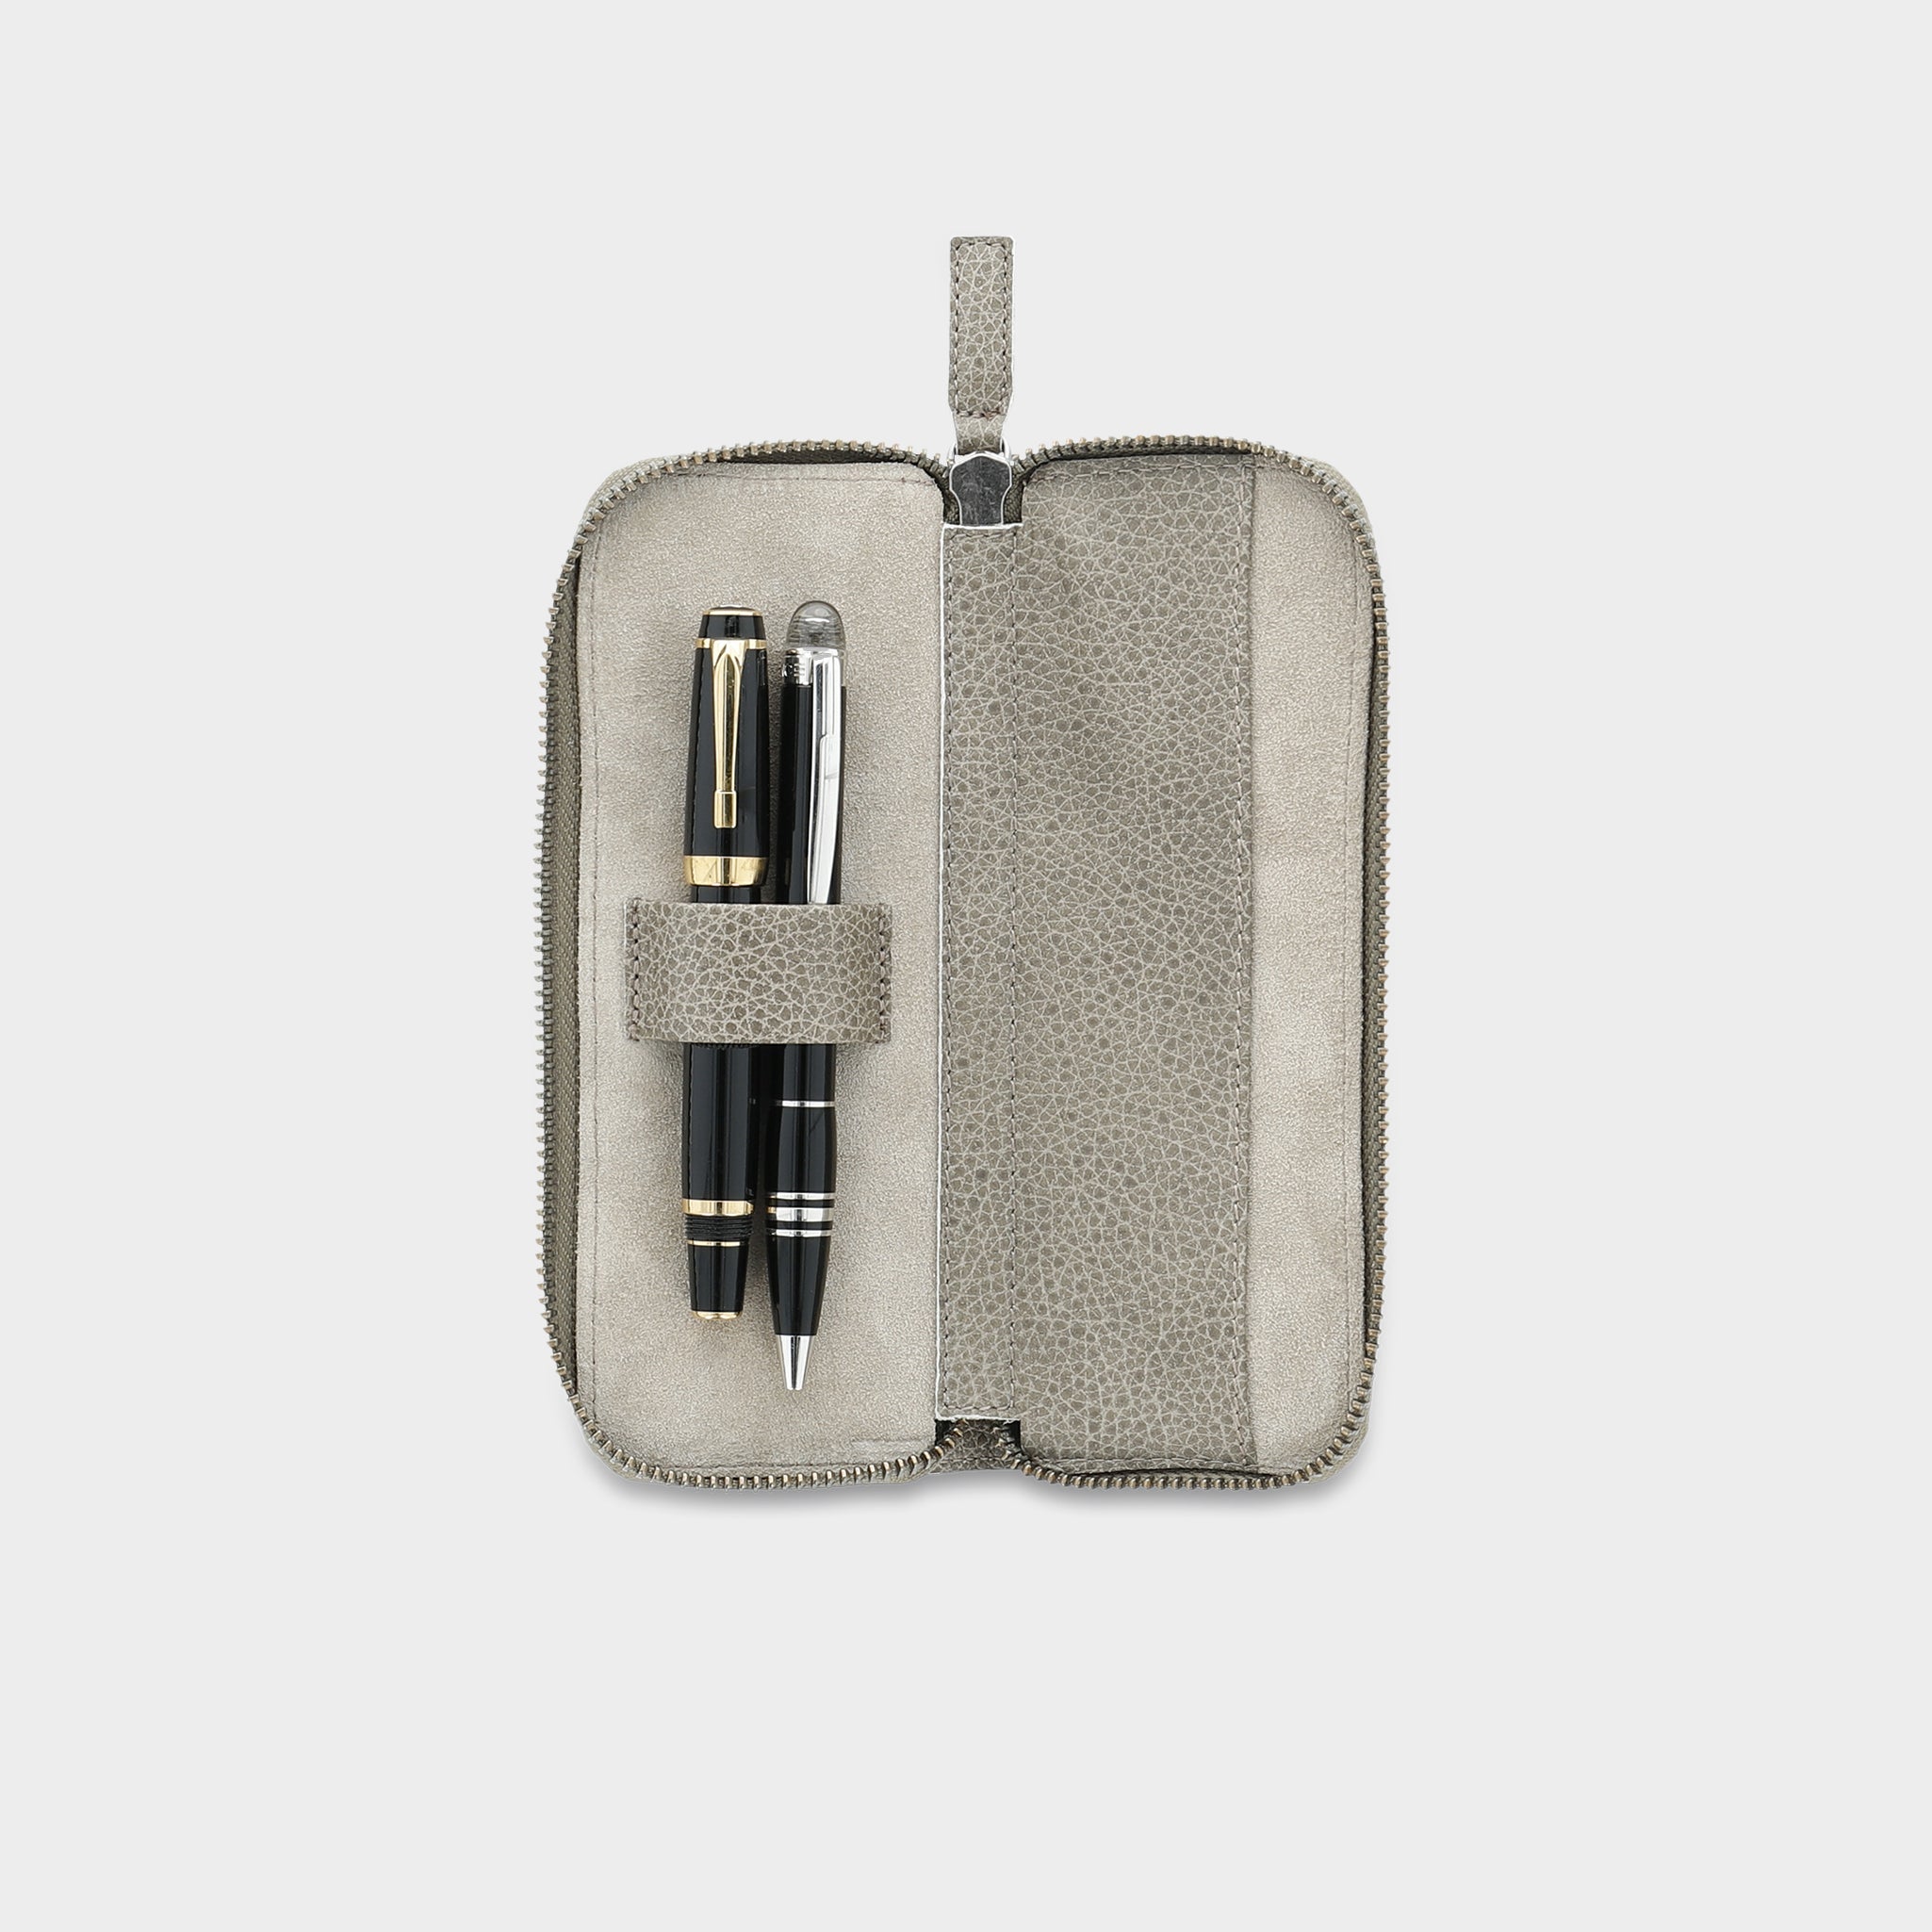 Pencil Case Pouch R142 – PICARD Fashion